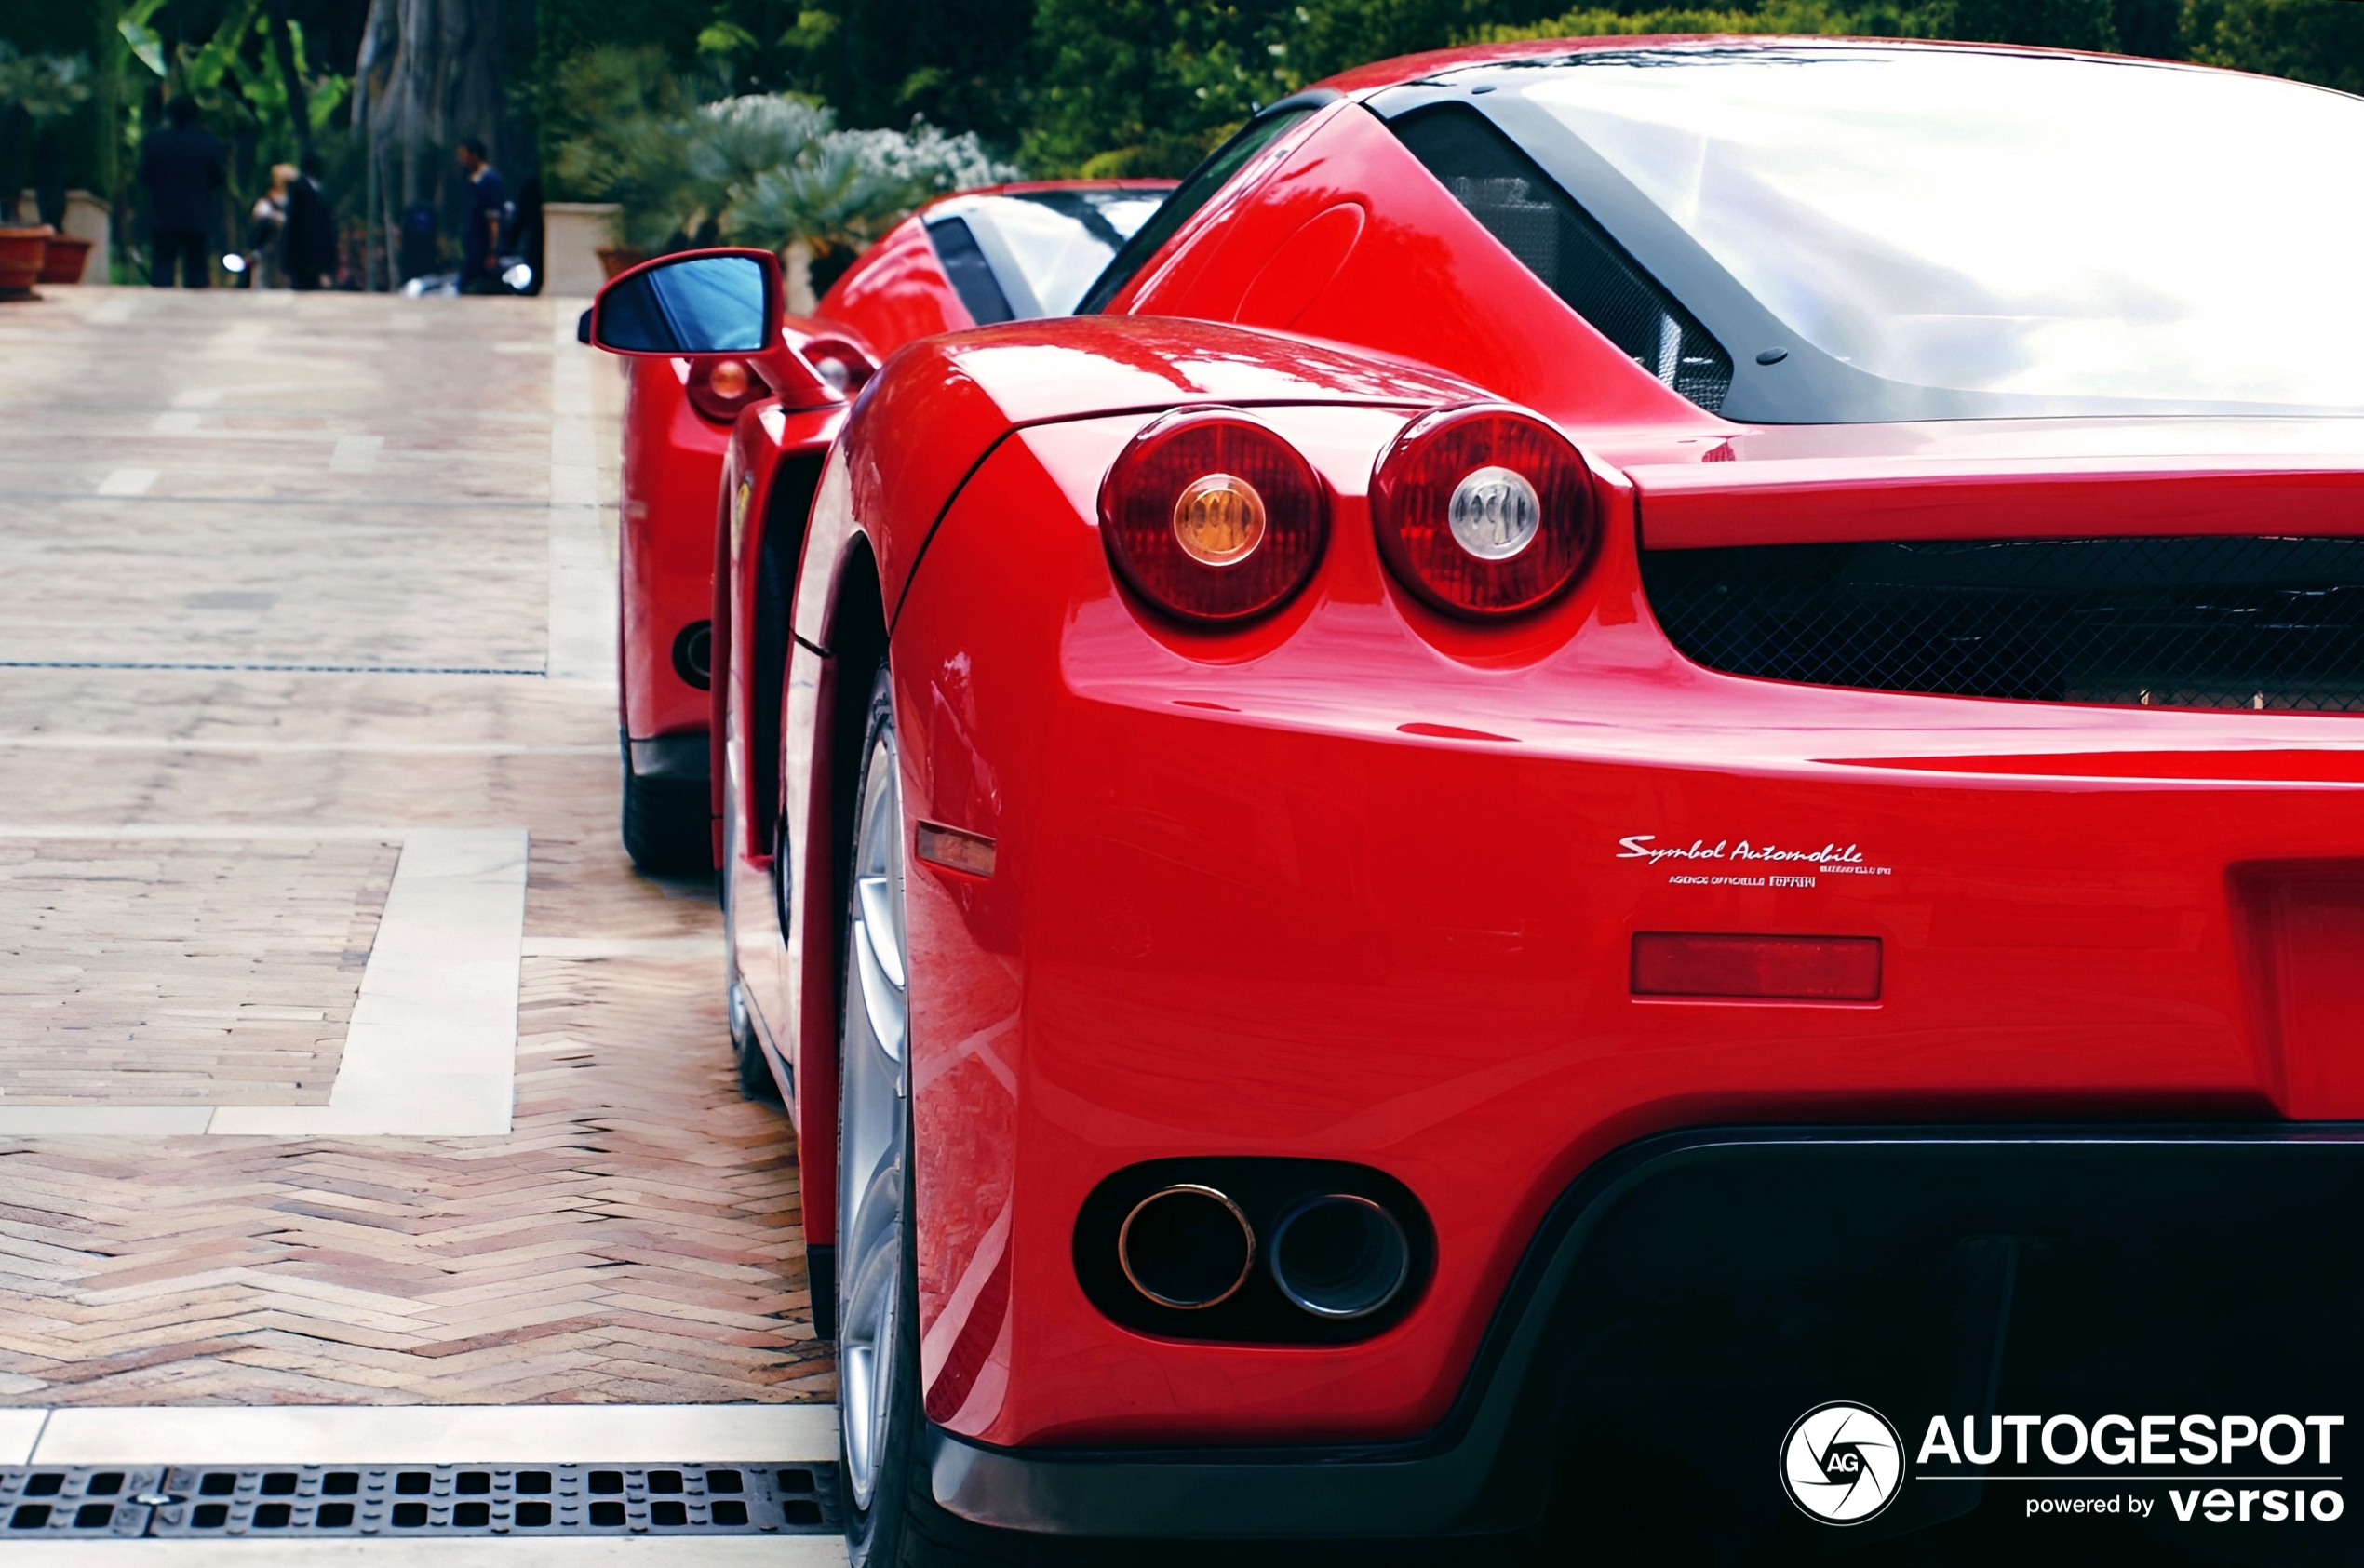 An astonishing combination of two Enzo Ferraris